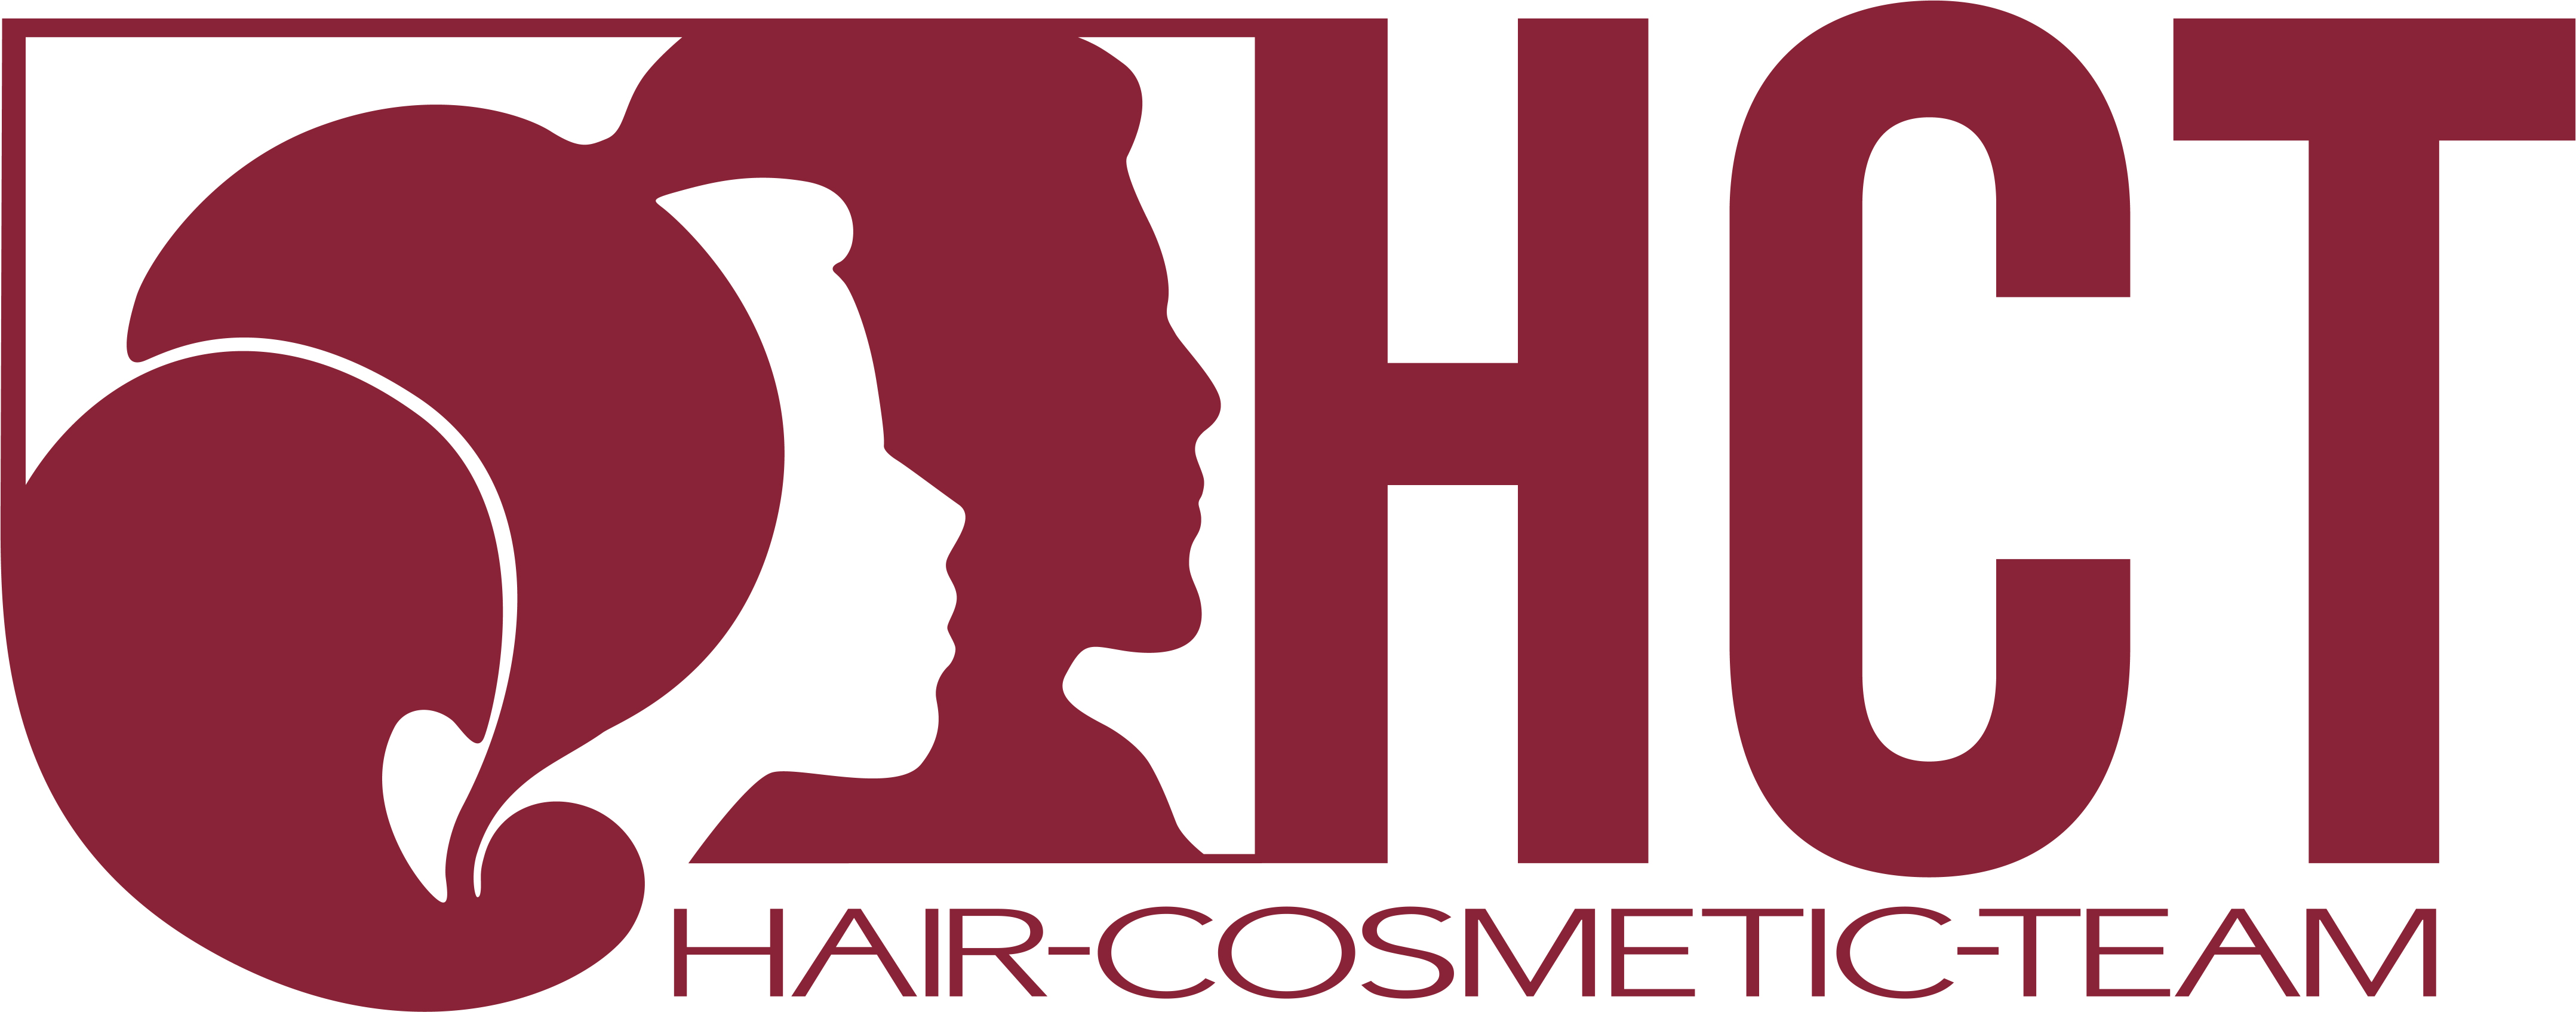 Hair-Cosmetic Team GmbH Schwerin